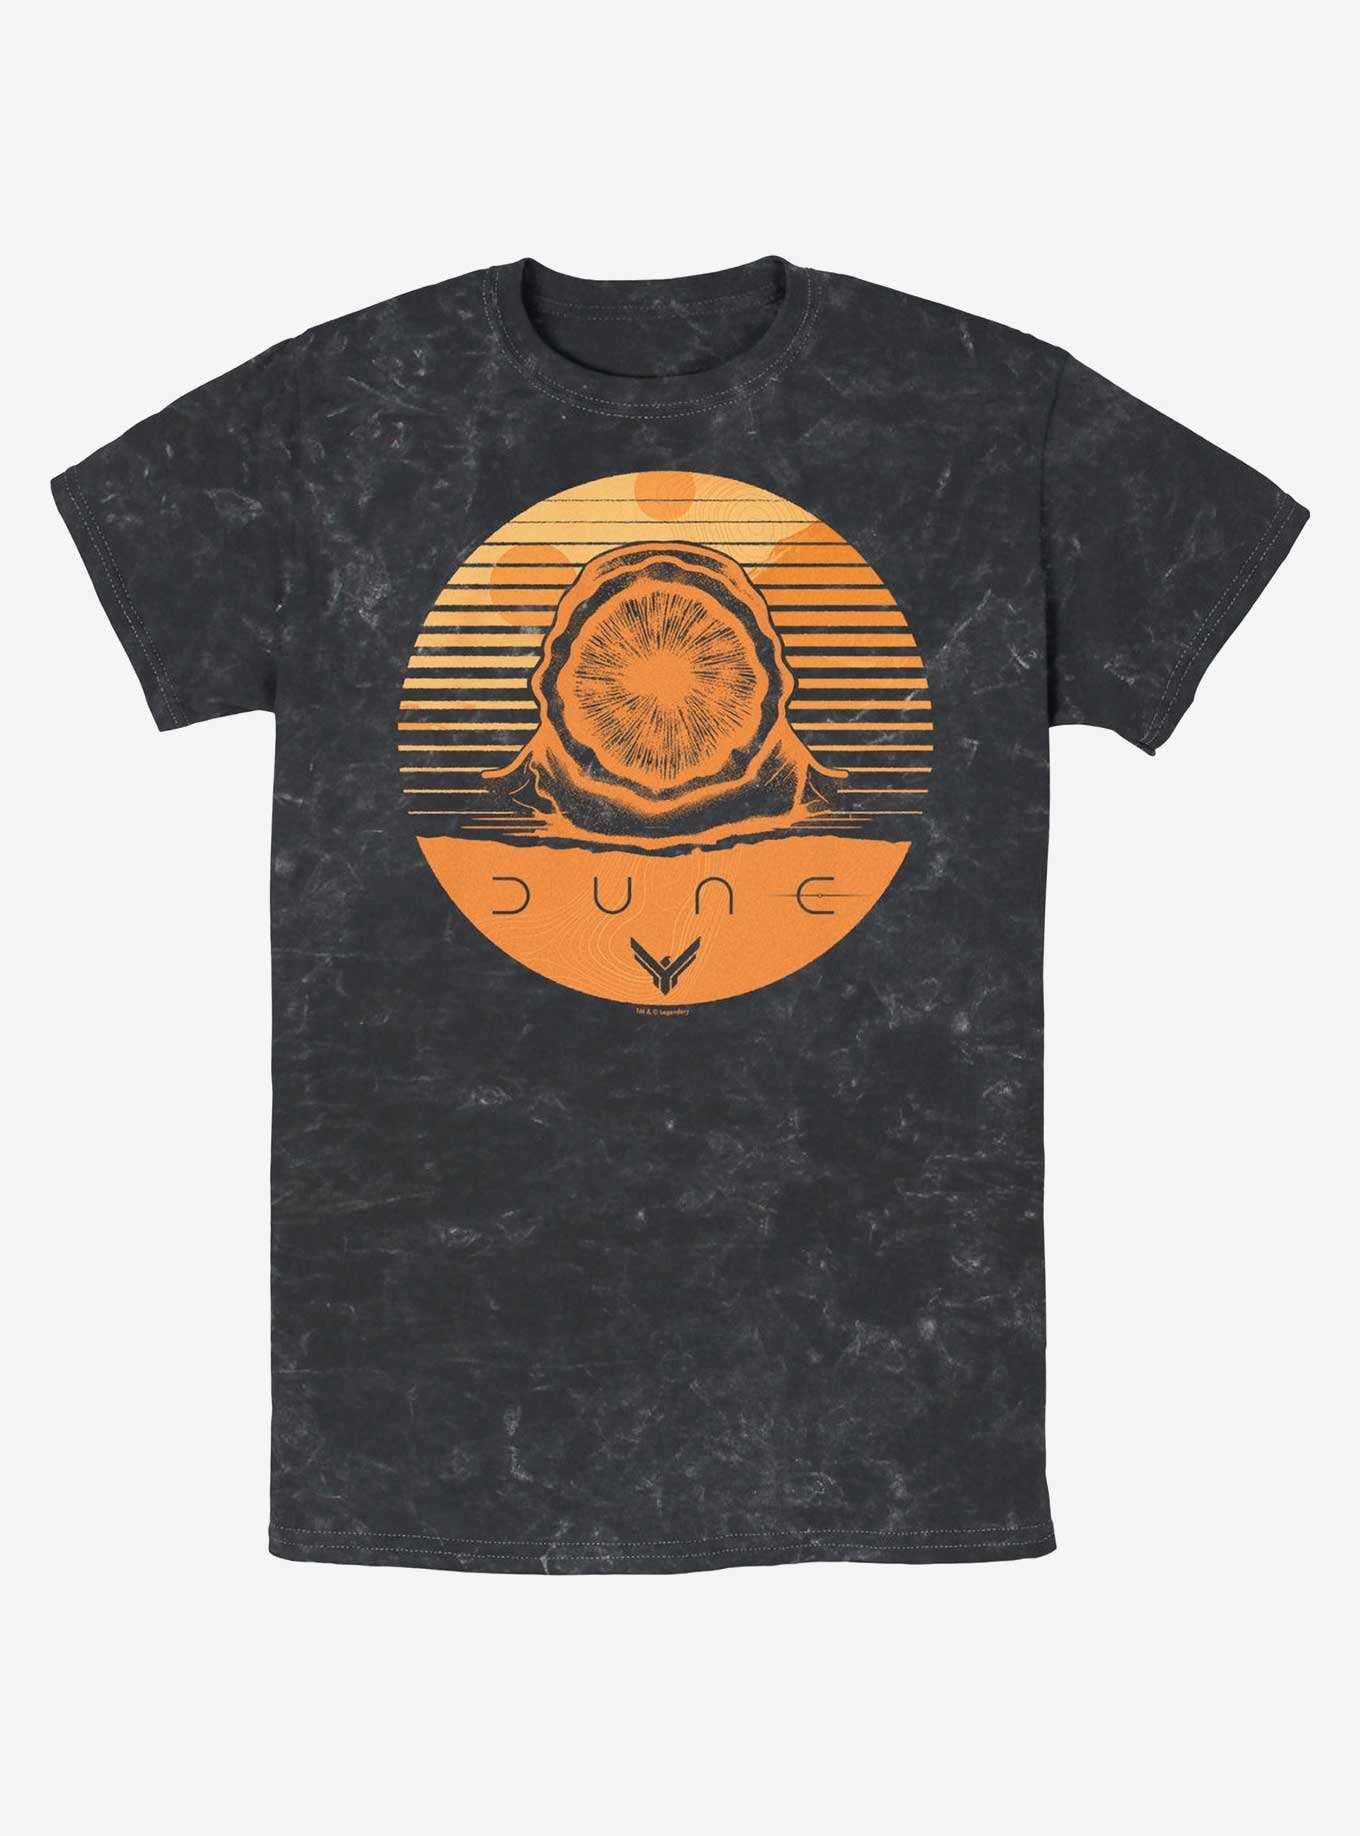 Dune Arrakis Sandworm Stamp Mineral Wash T-Shirt, , hi-res